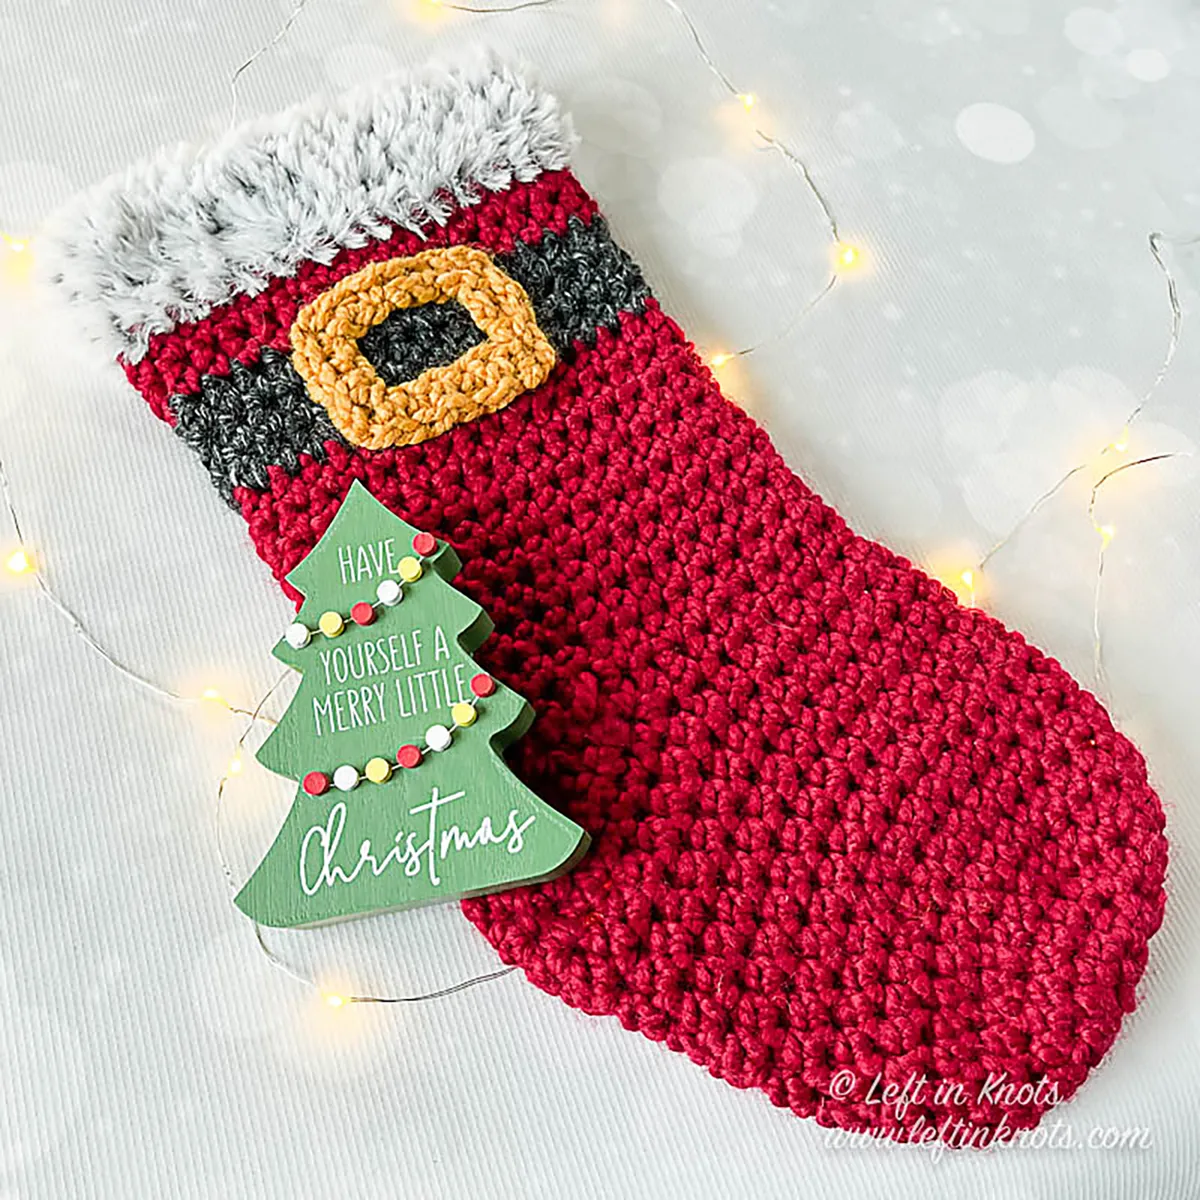 Santa free stocking crochet pattern